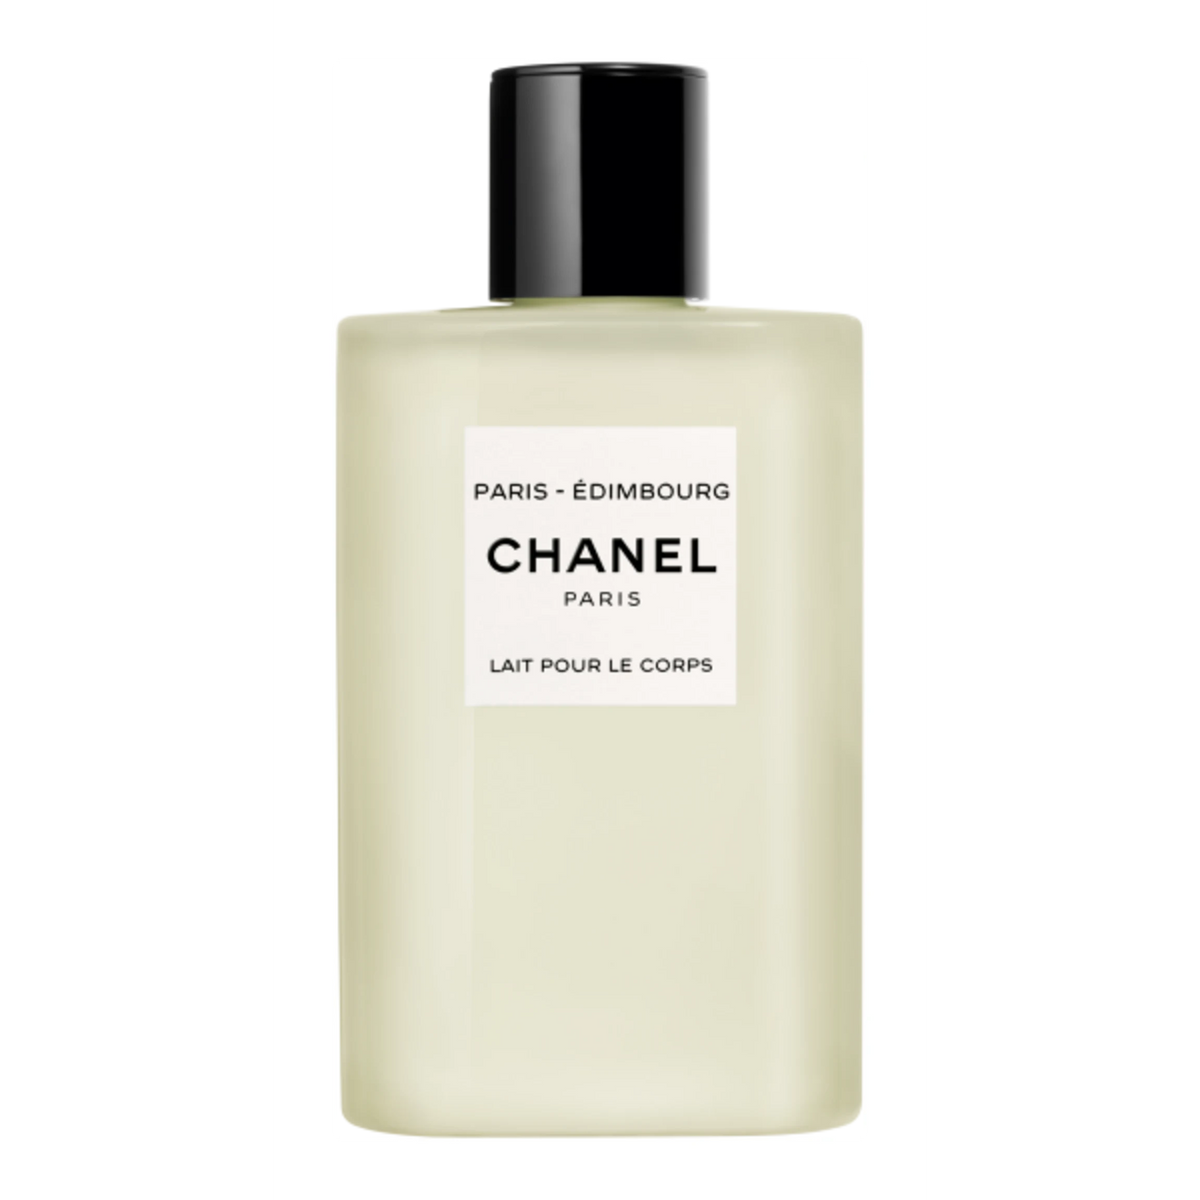 Chanel Paris-Edimbourg Sample